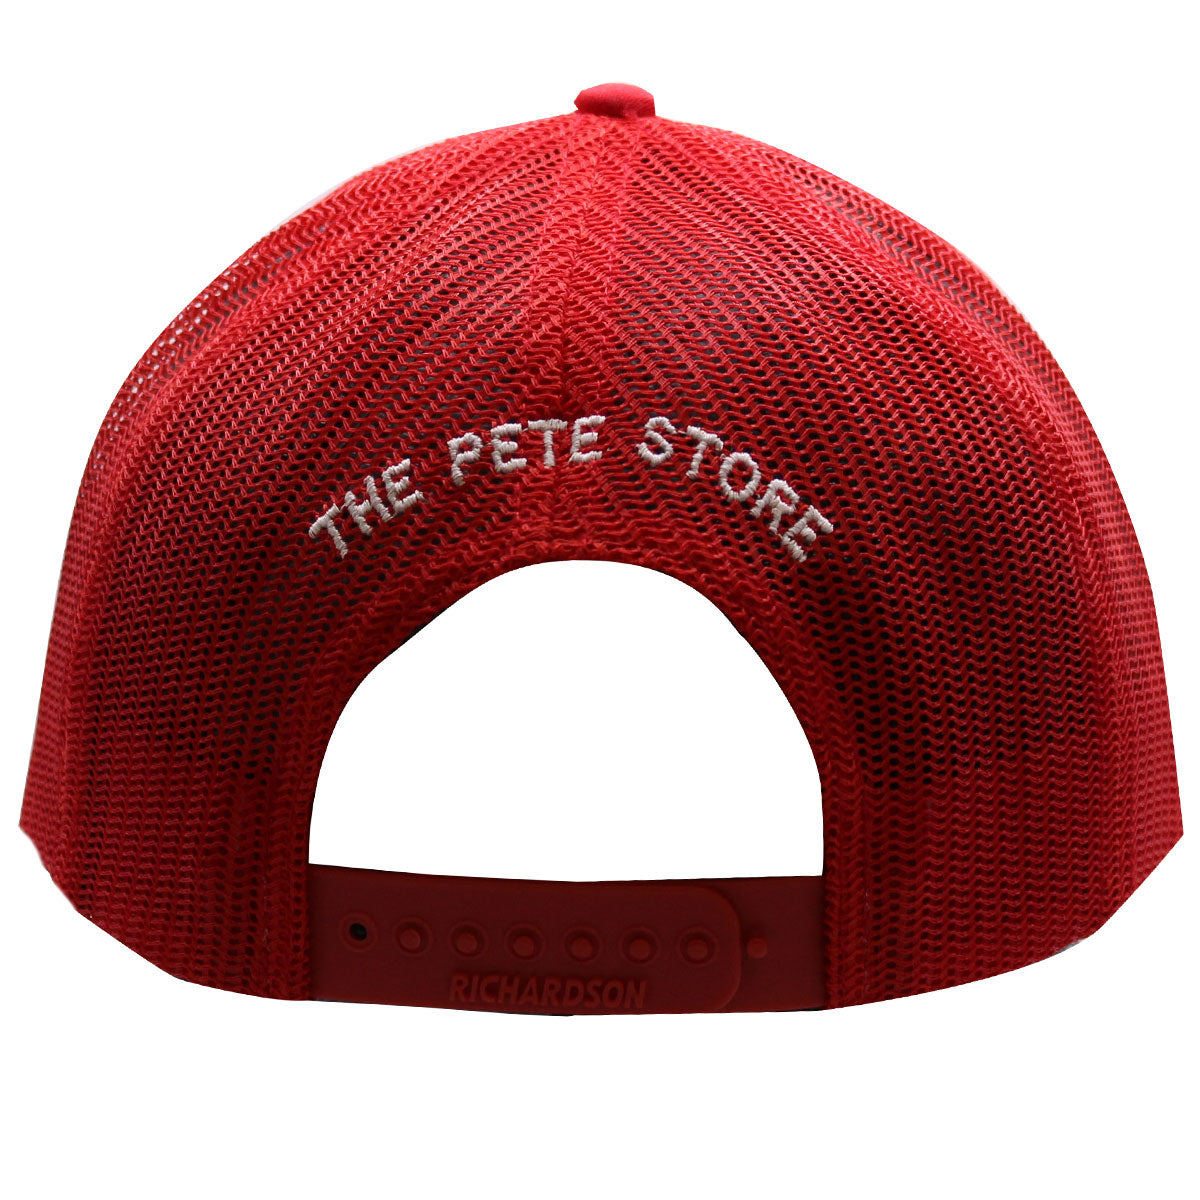 Peterbilt Classic 112 Red Trucker Cap